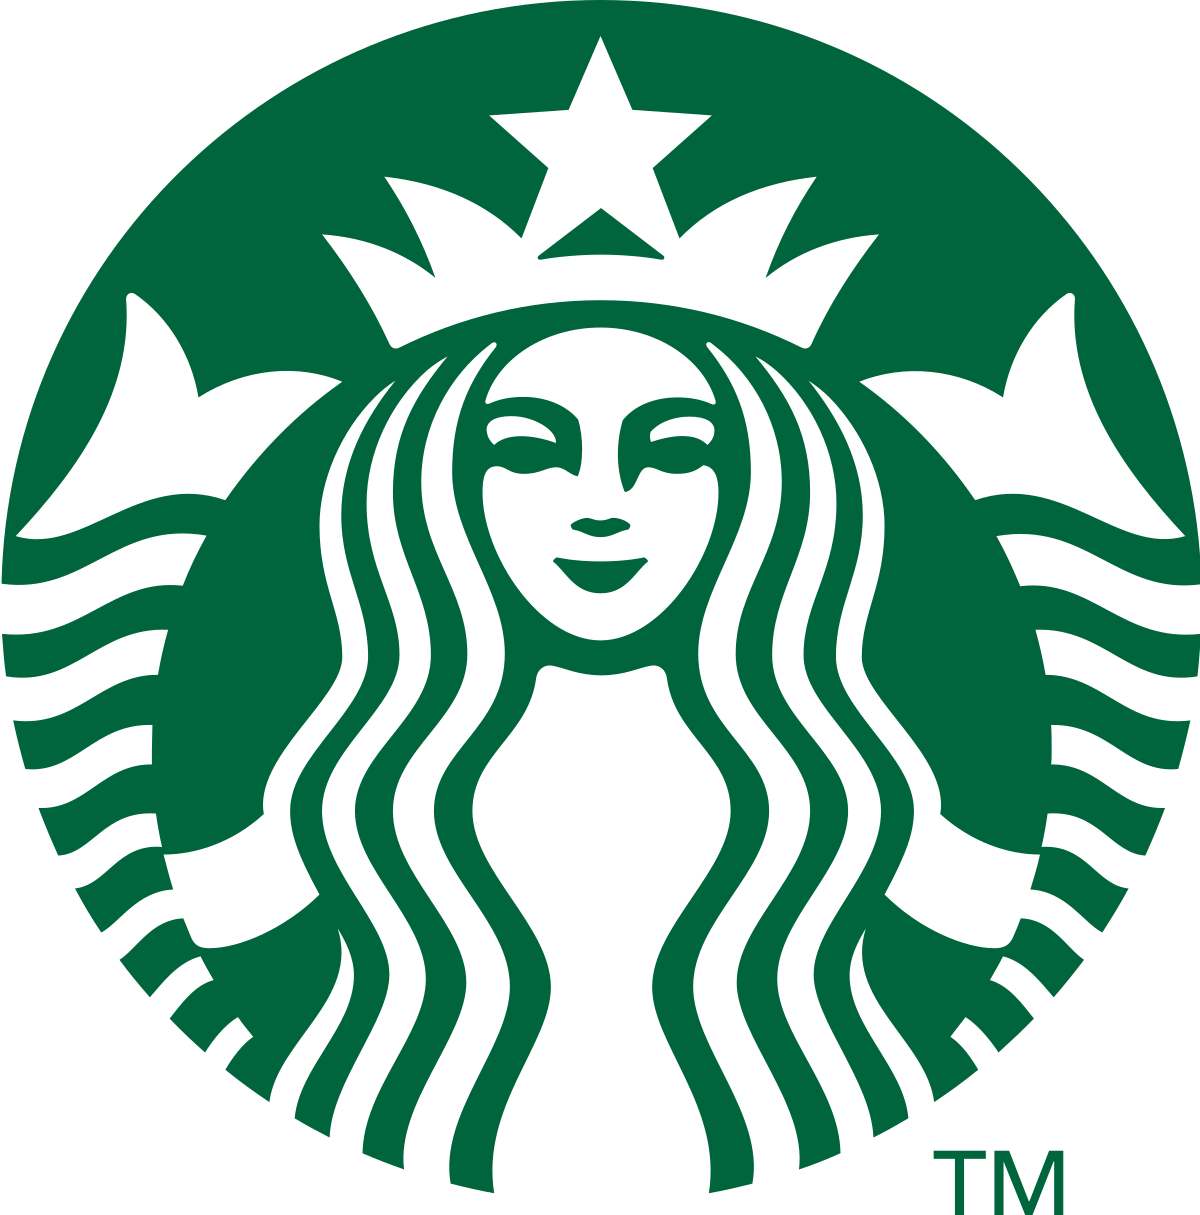 Starbucks | Enjoy a free treat when you sign up for the Starbucks rewards program